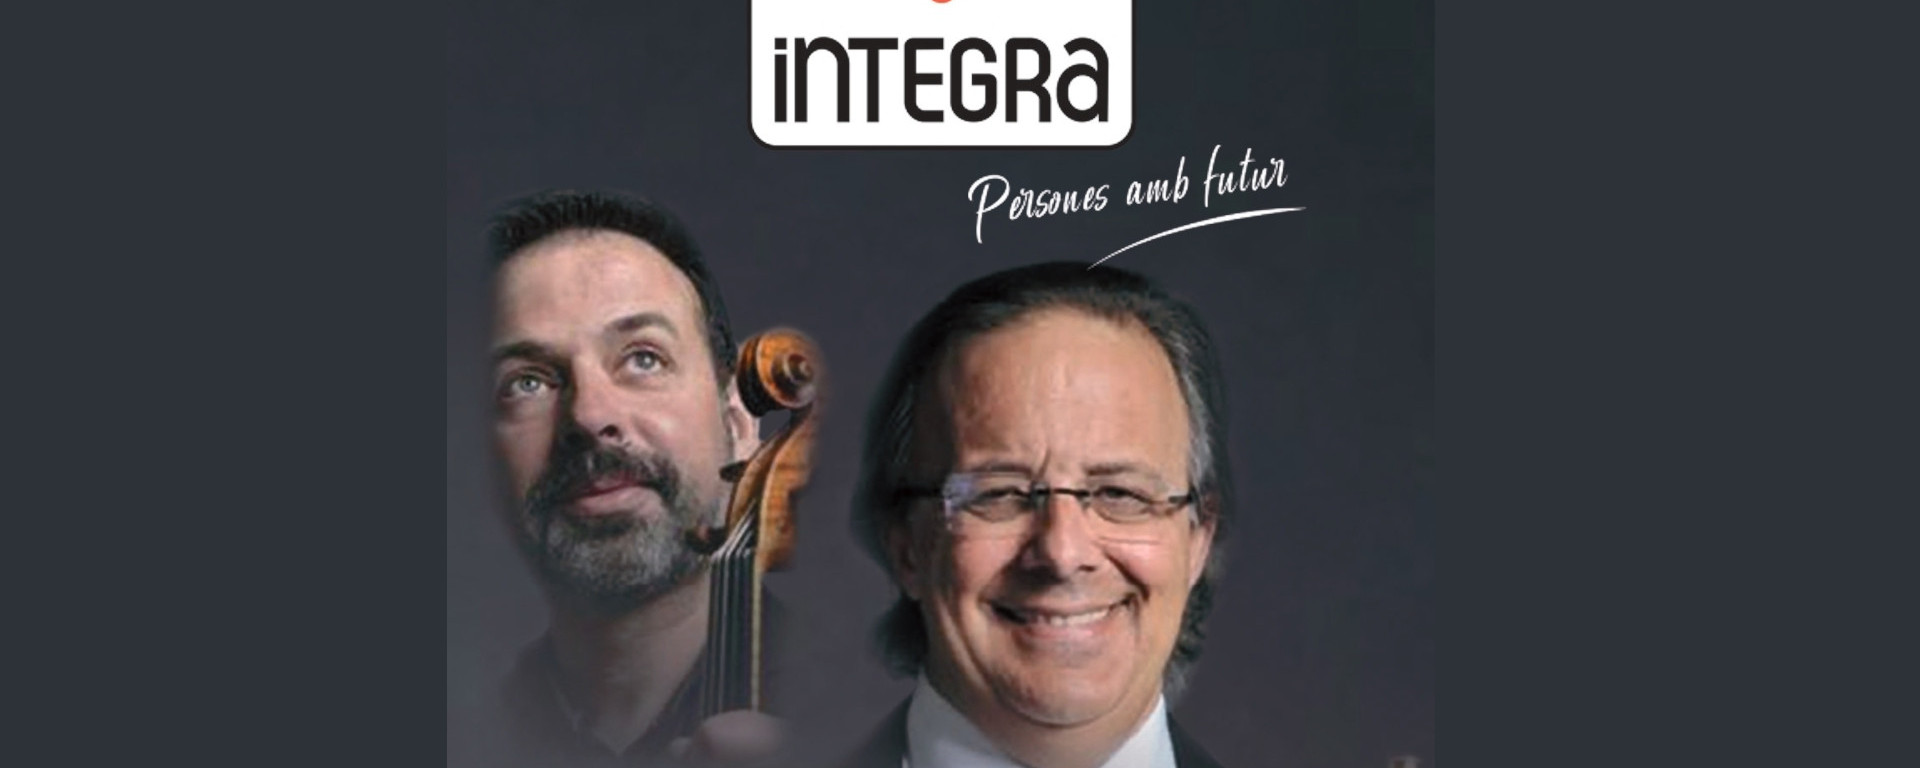 concert-integra-agenda